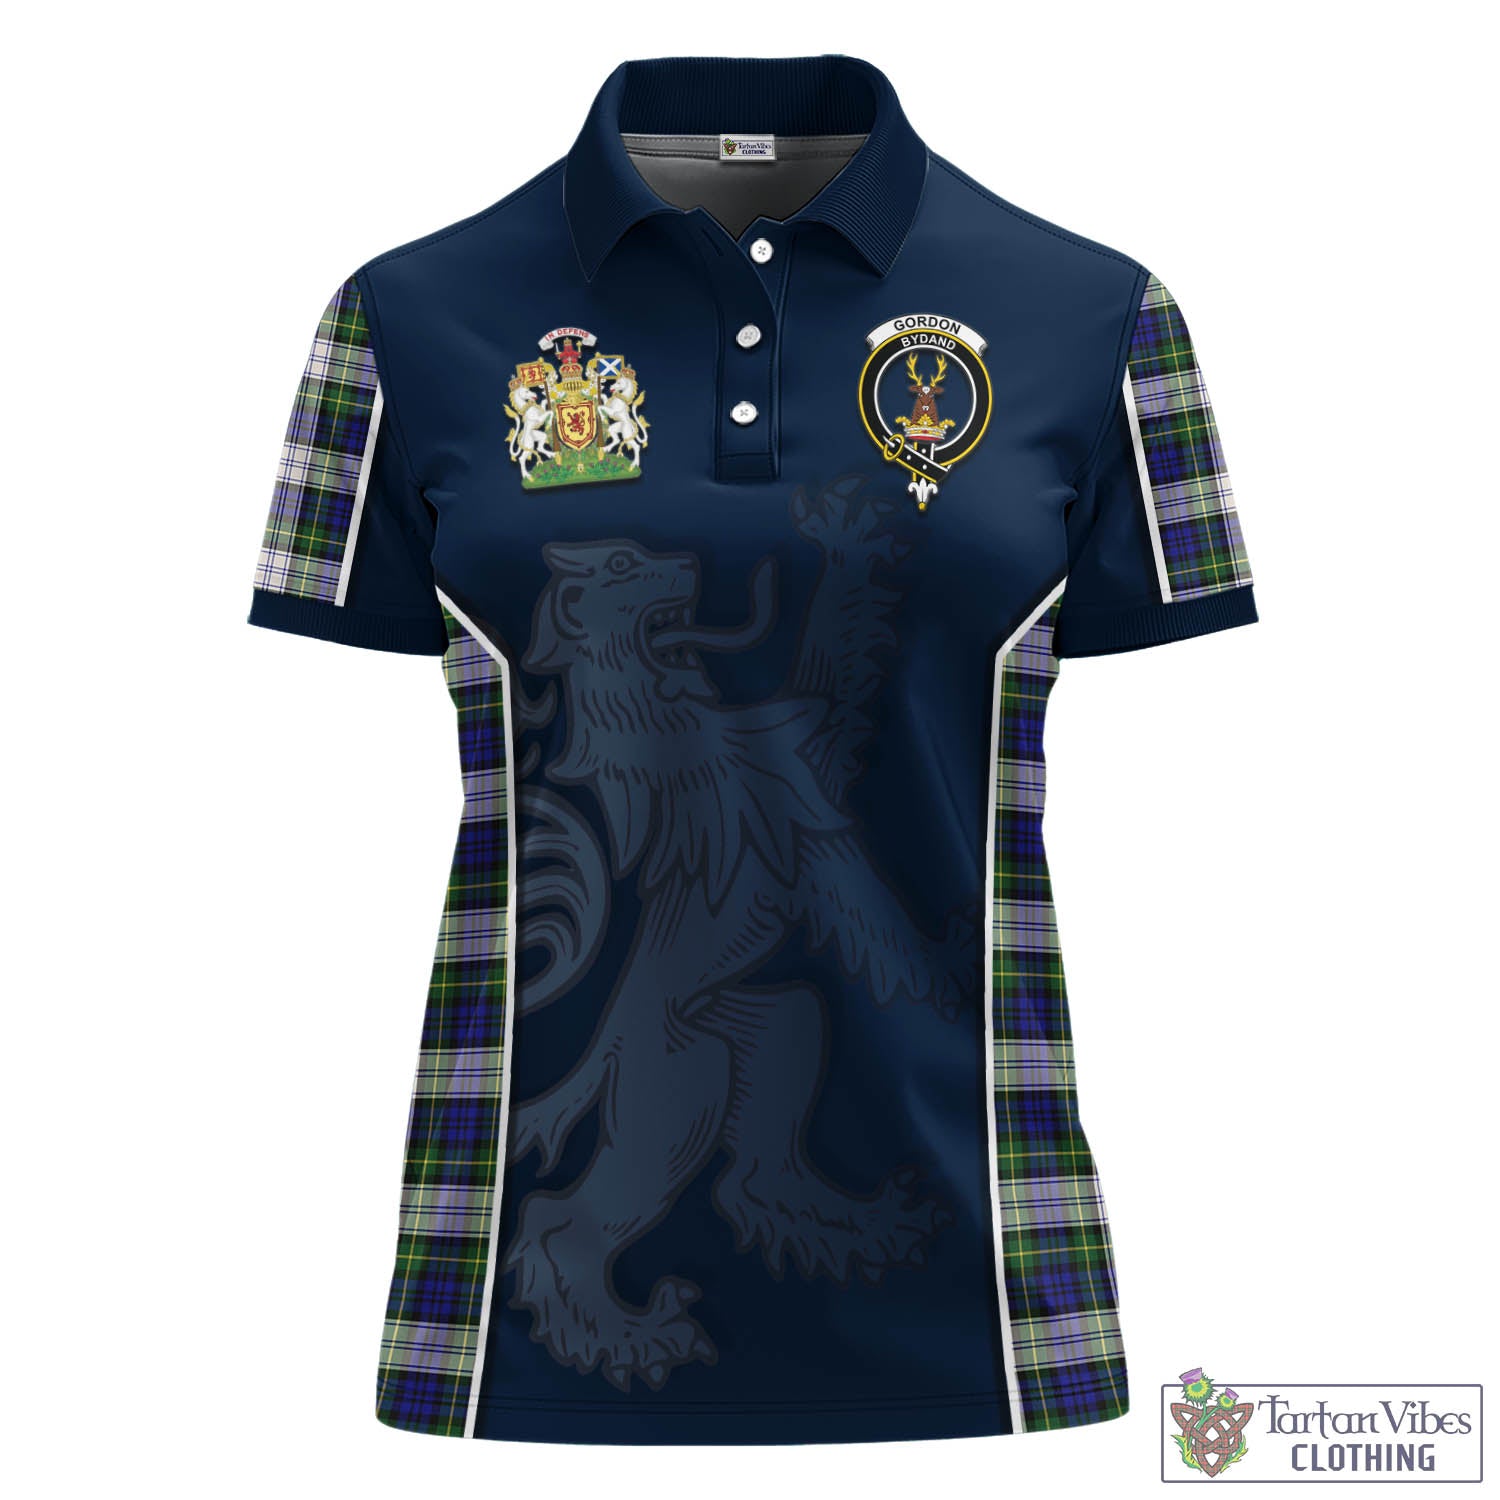 Tartan Vibes Clothing Gordon Dress Modern Tartan Women's Polo Shirt with Family Crest and Lion Rampant Vibes Sport Style